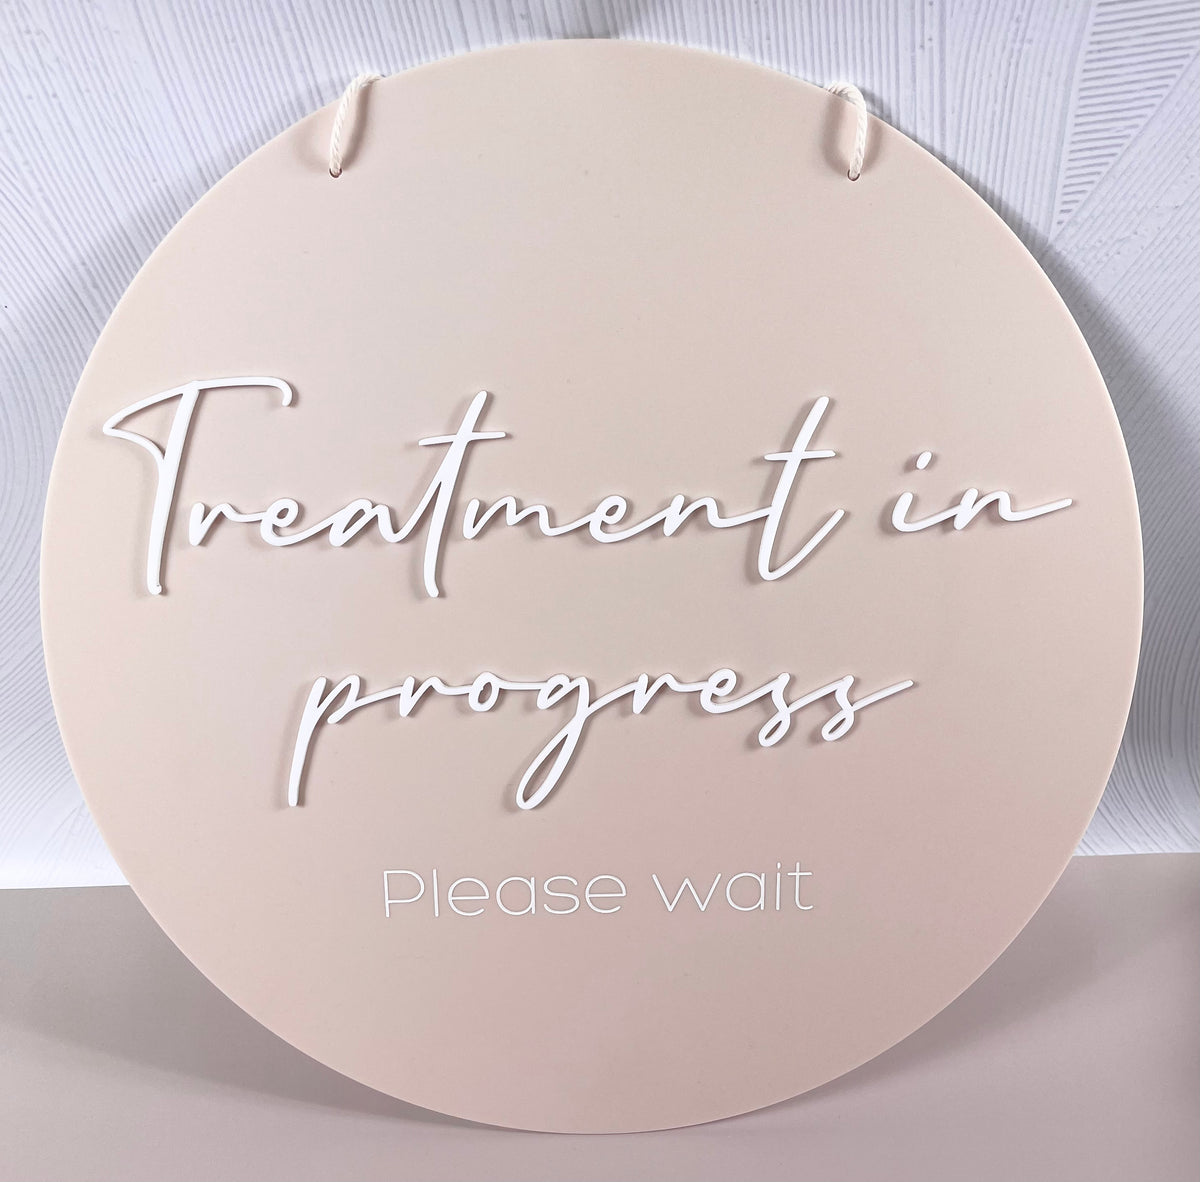 treatment in progress sign